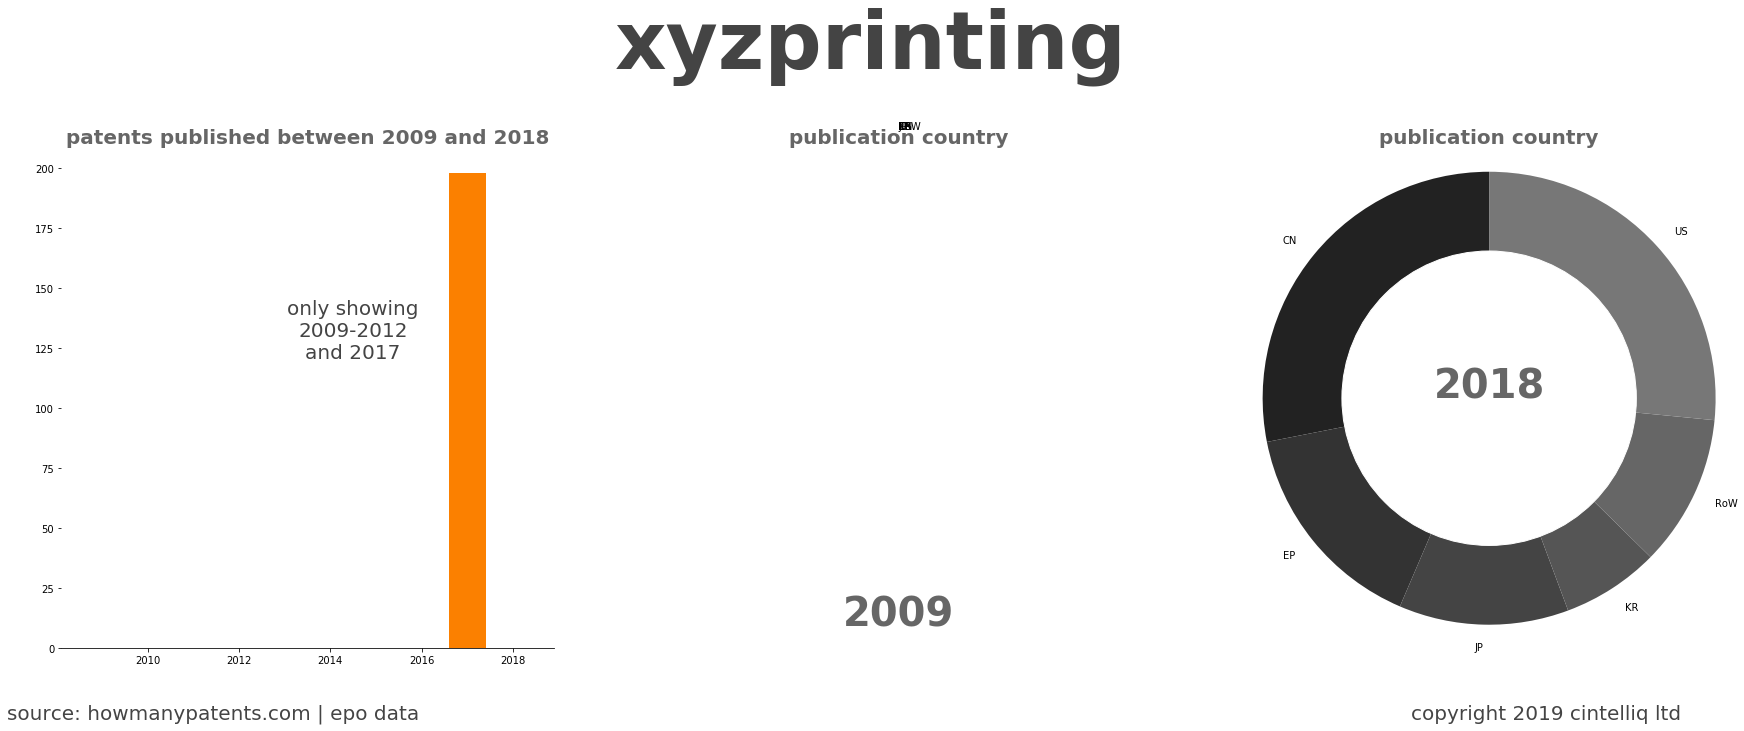 summary of patents for Xyzprinting